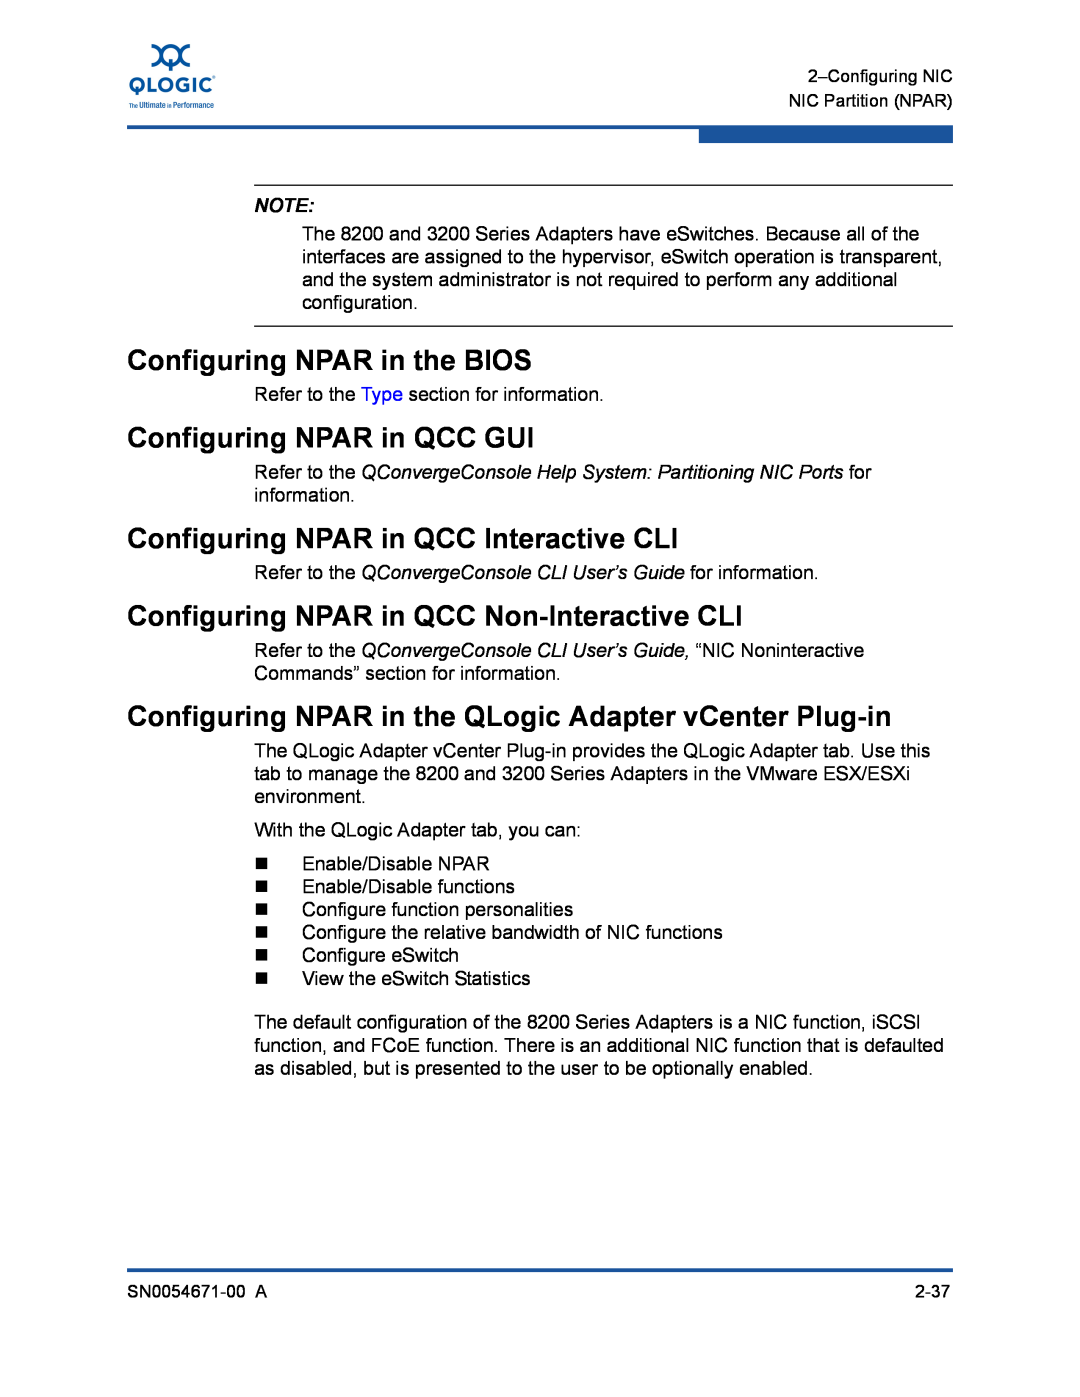 Q-Logic 3200, 8200 manual Configuring NPAR in the BIOS, Configuring NPAR in QCC GUI, Configuring NPAR in QCC Interactive CLI 